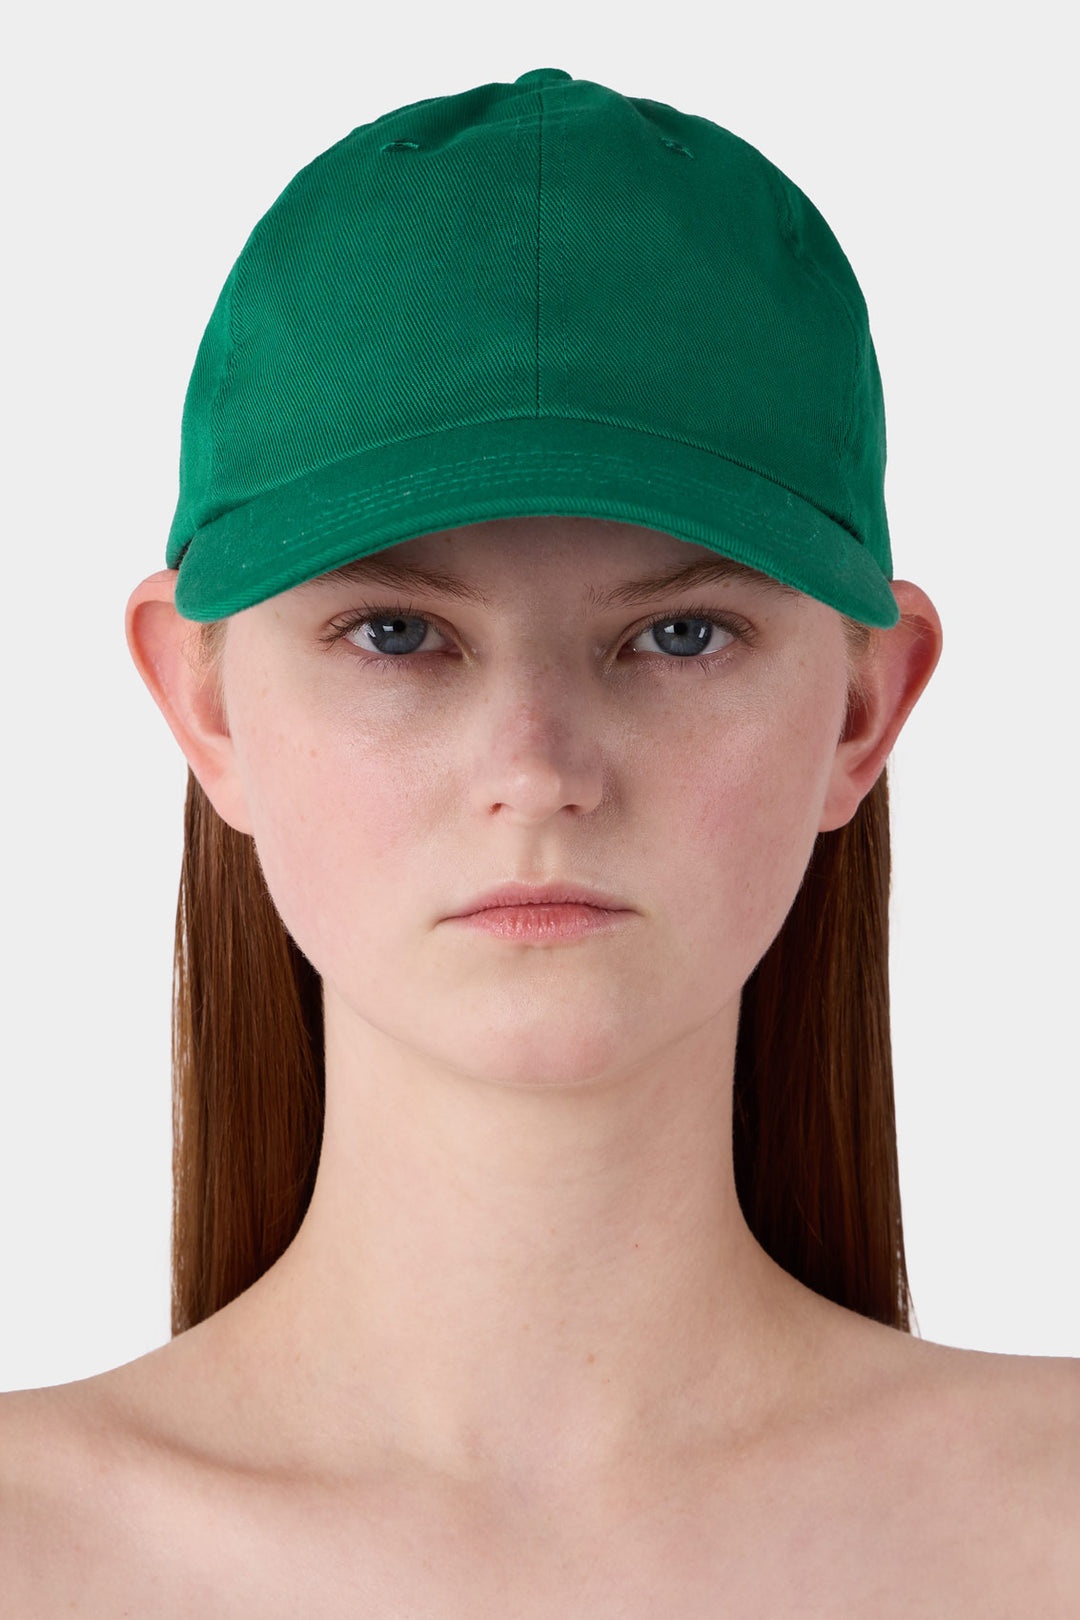 EIWS BASEBALL CAP / emerald green - 4